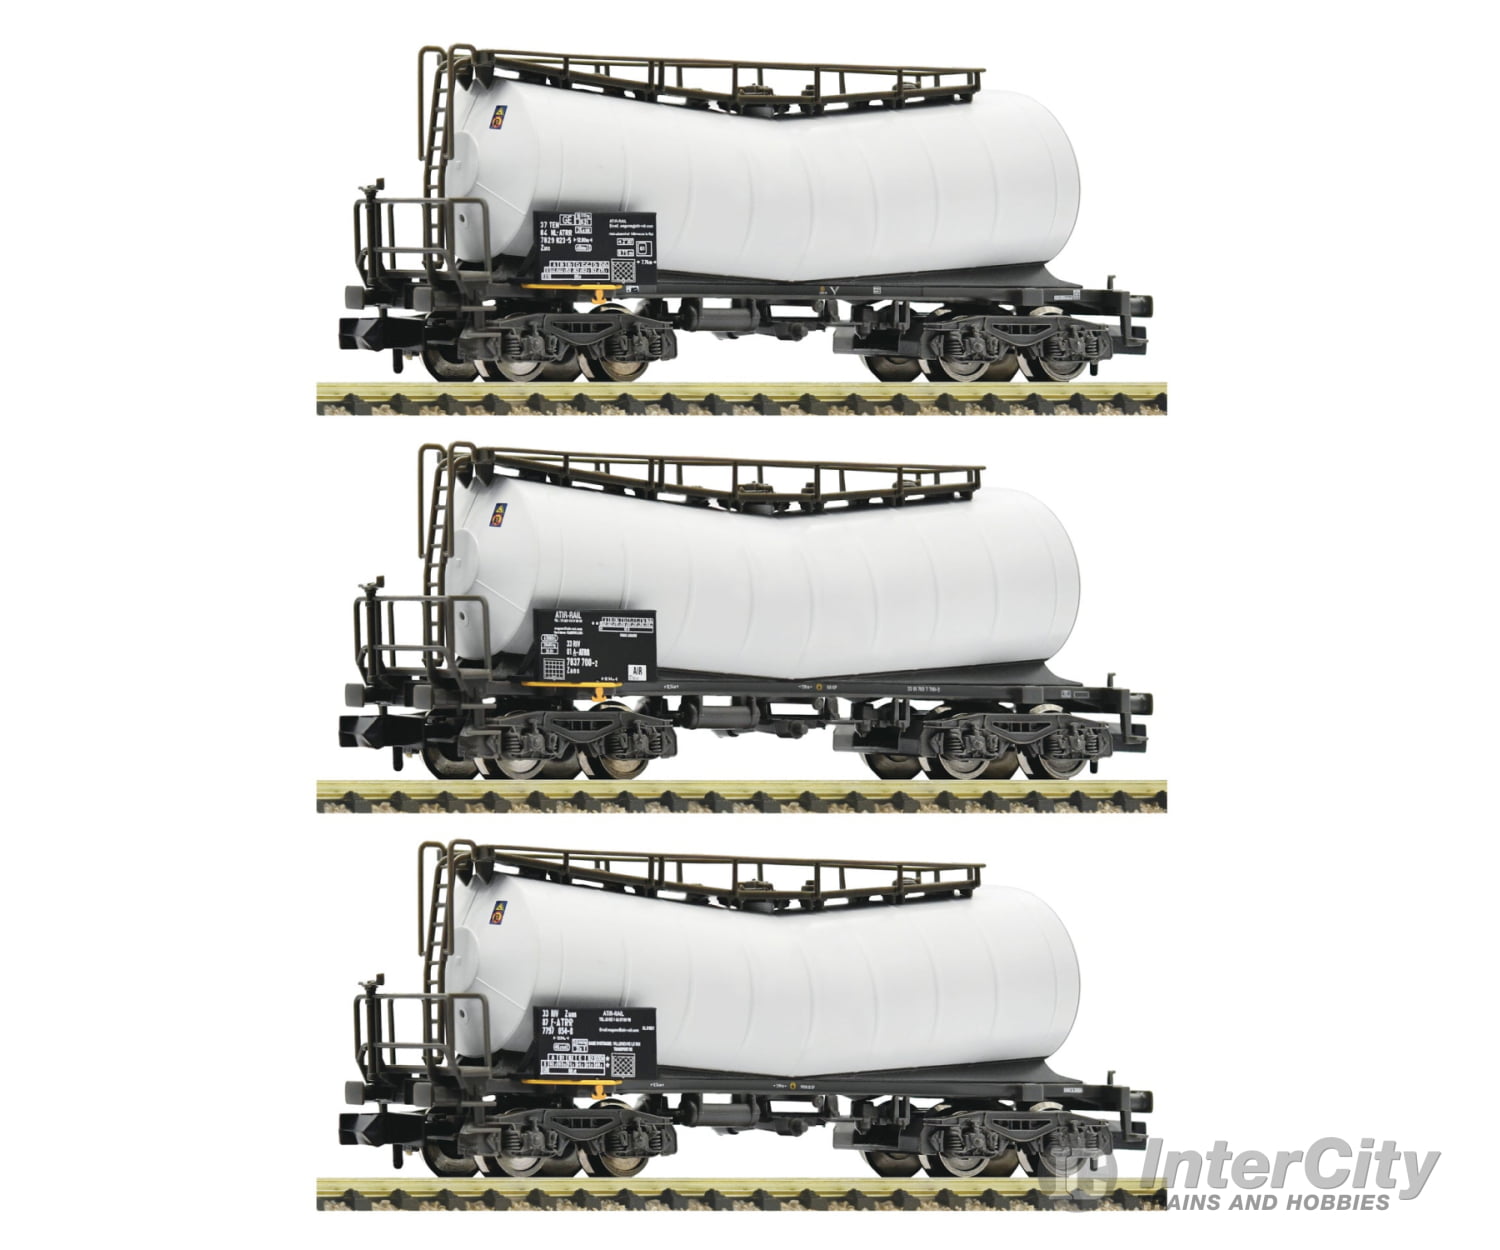 Fleischmann 846007 N 3 Piece Set: Slurry Wagons Atir-Rail European Freight Cars